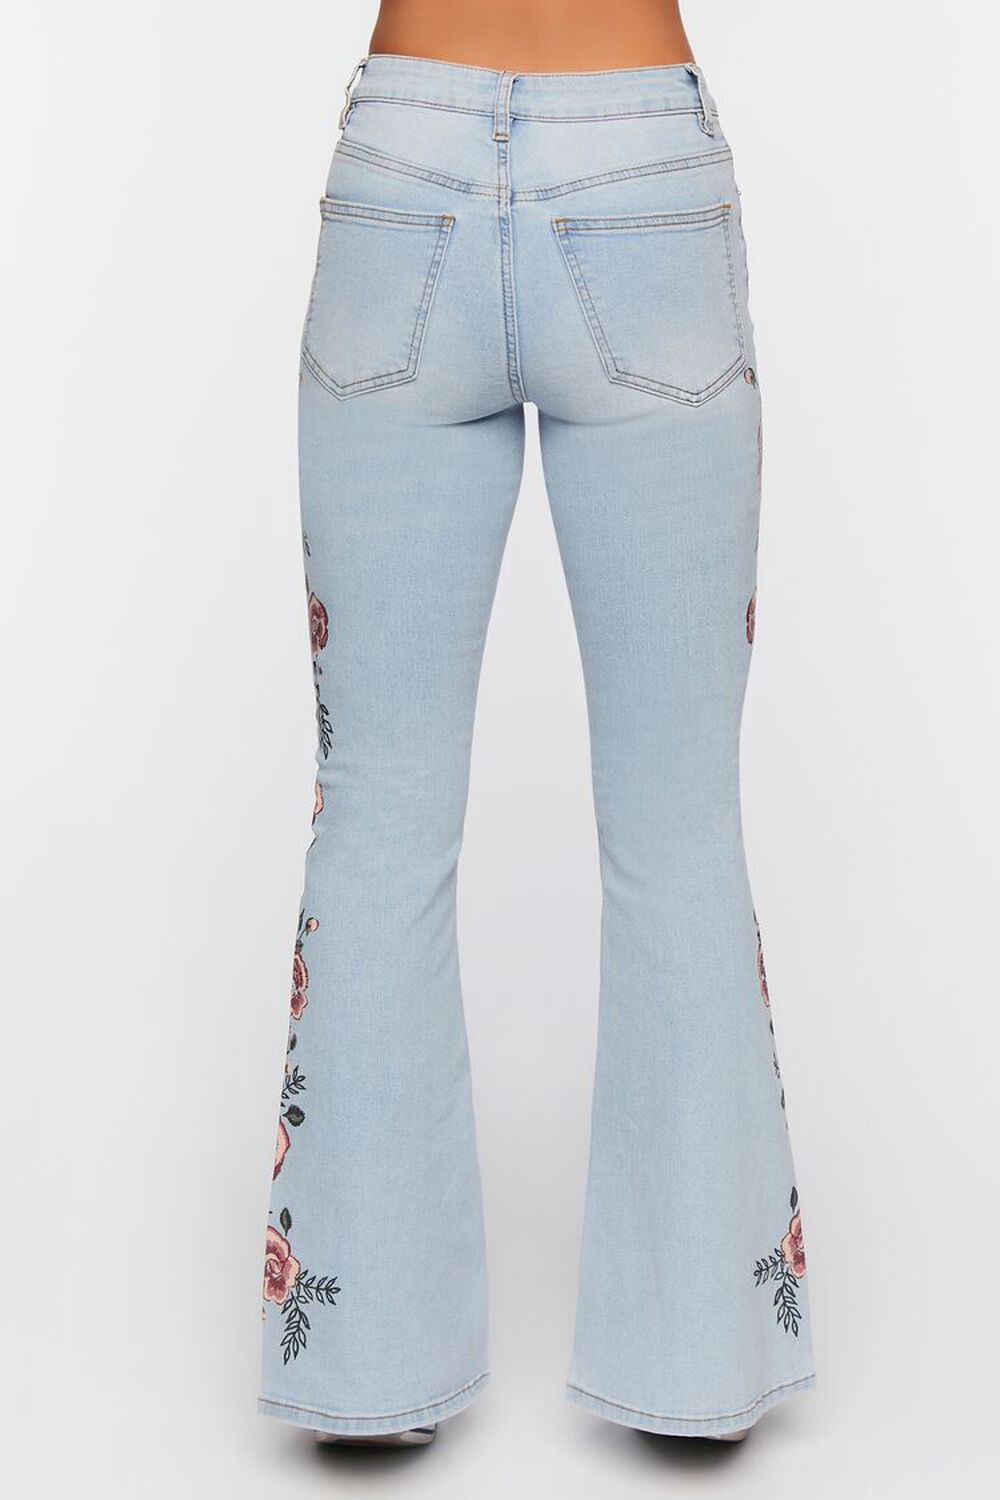 MEDIUM DENIM Floral Flare-Leg Jeans, image 3